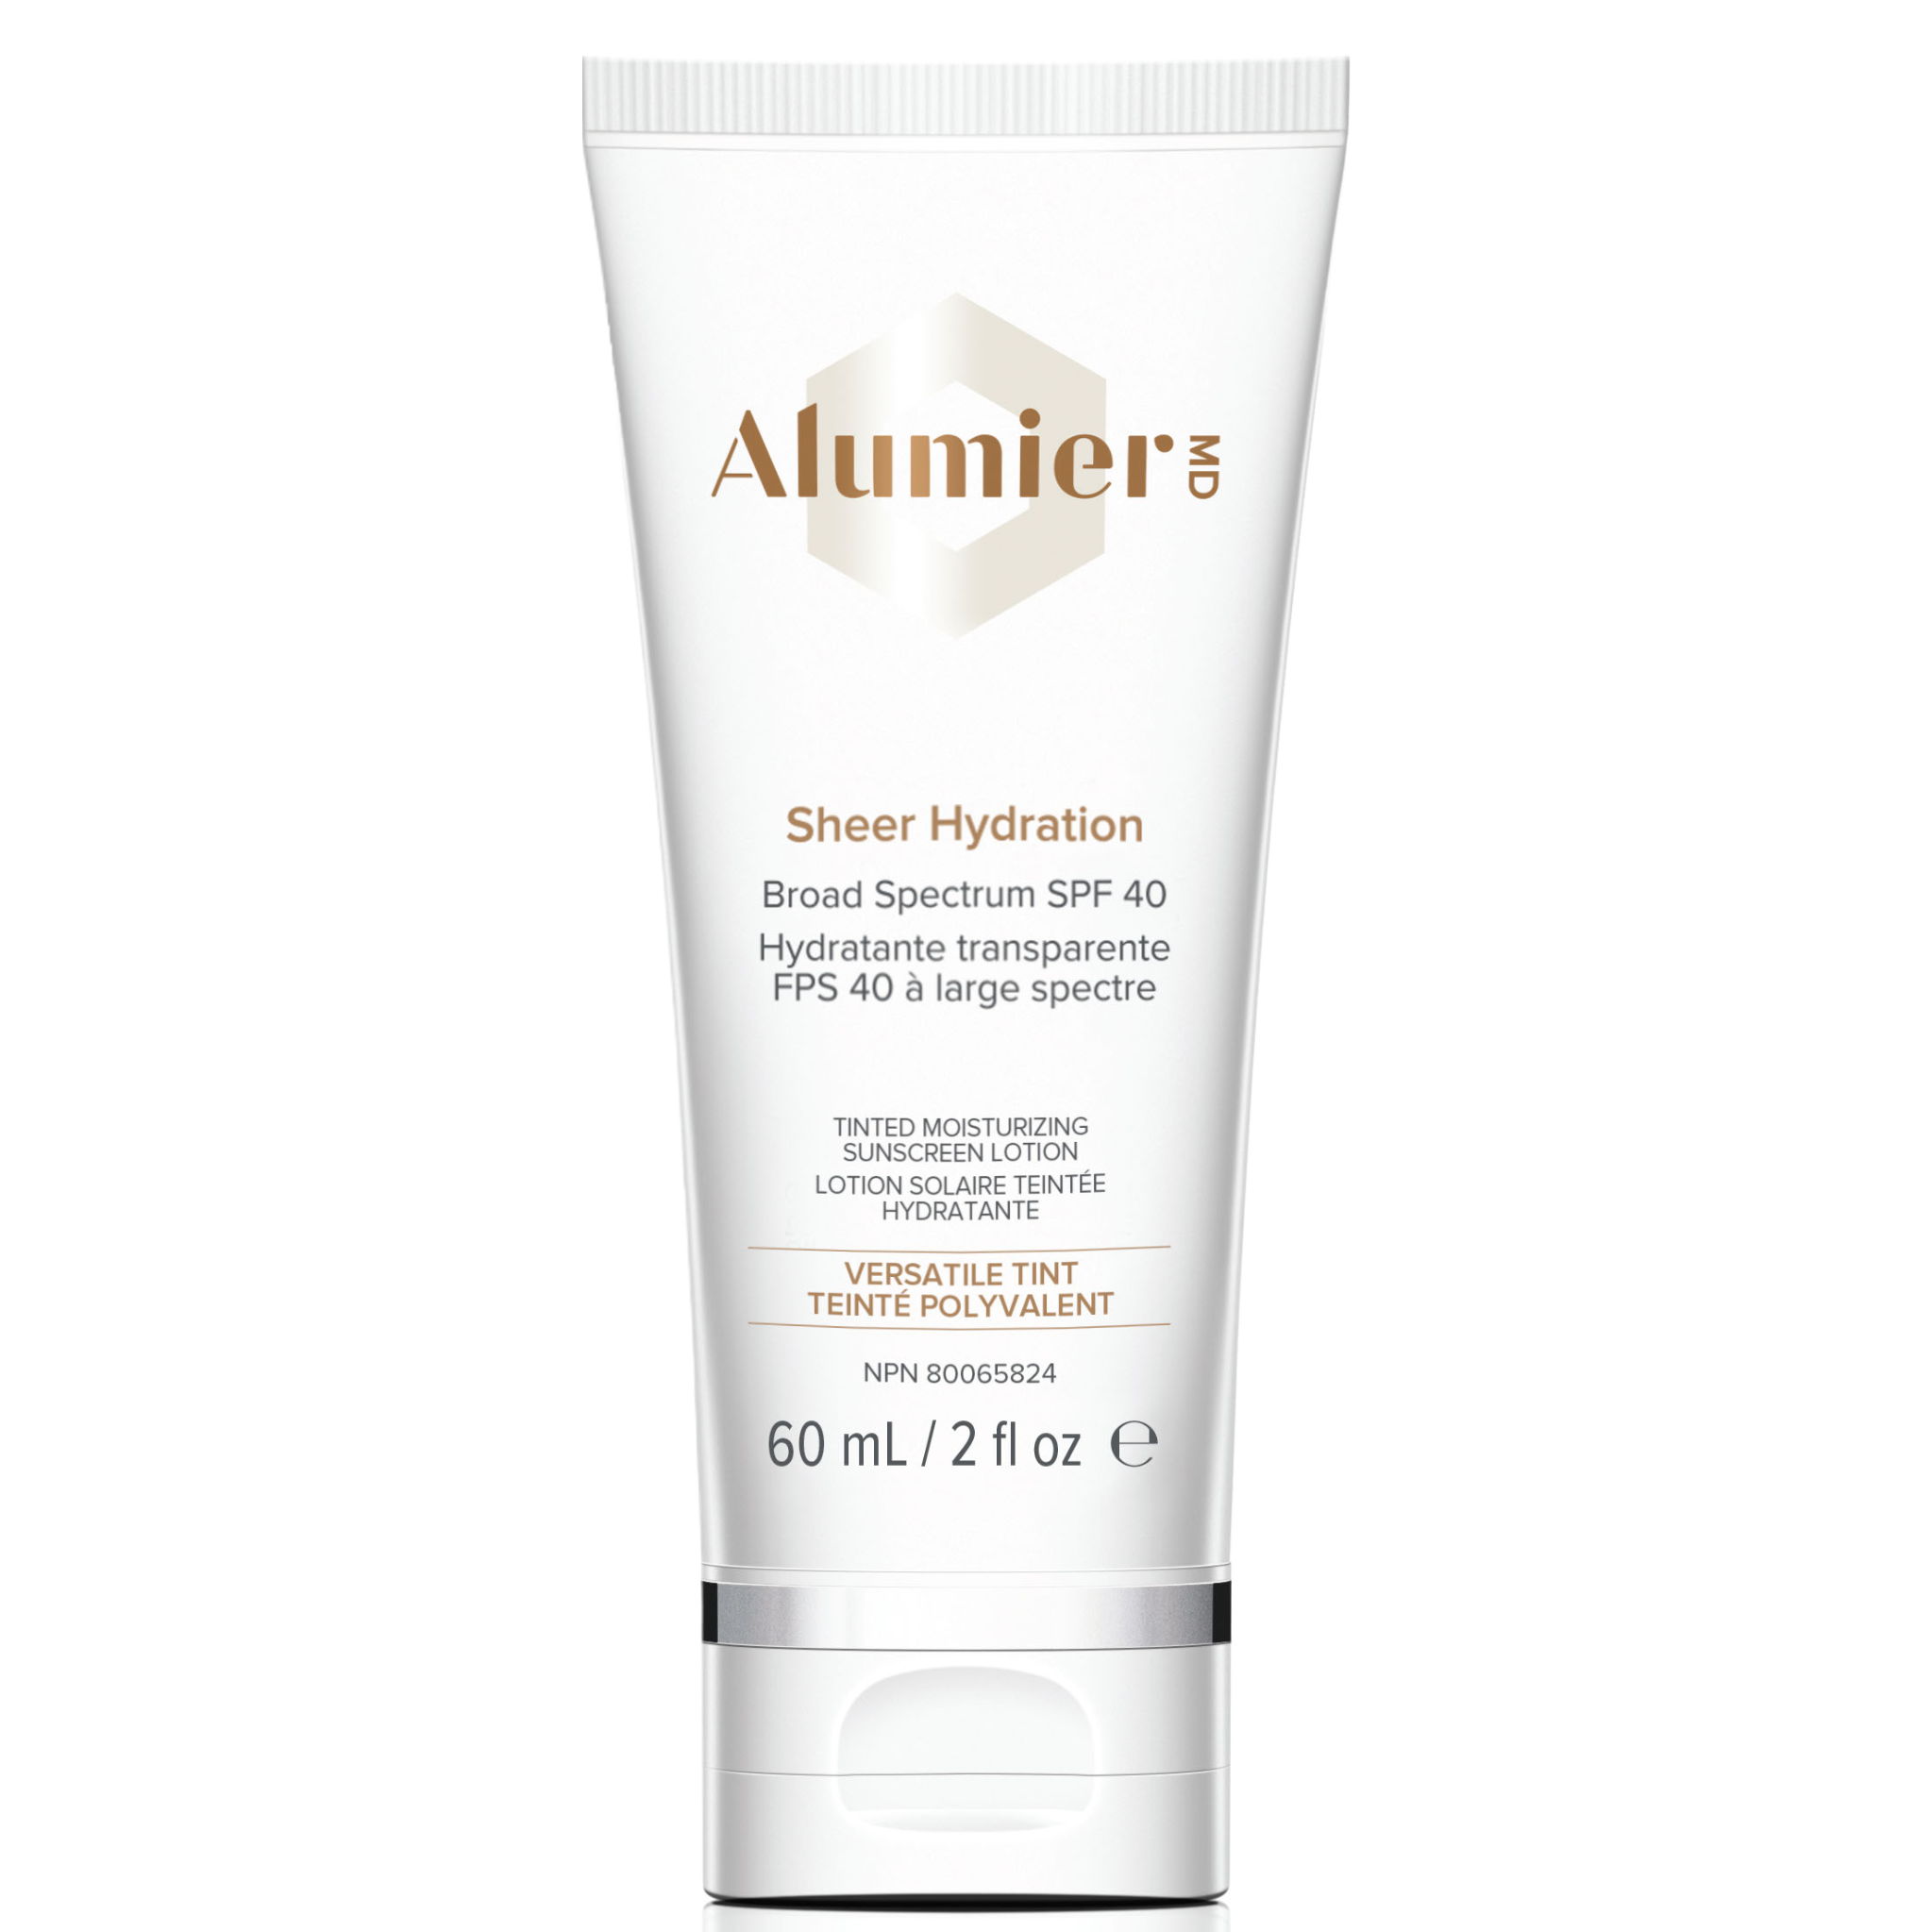 Alumier MD | Sheer Hydration Broad Spectrum SPF 40 Versatile Tint (60ml)